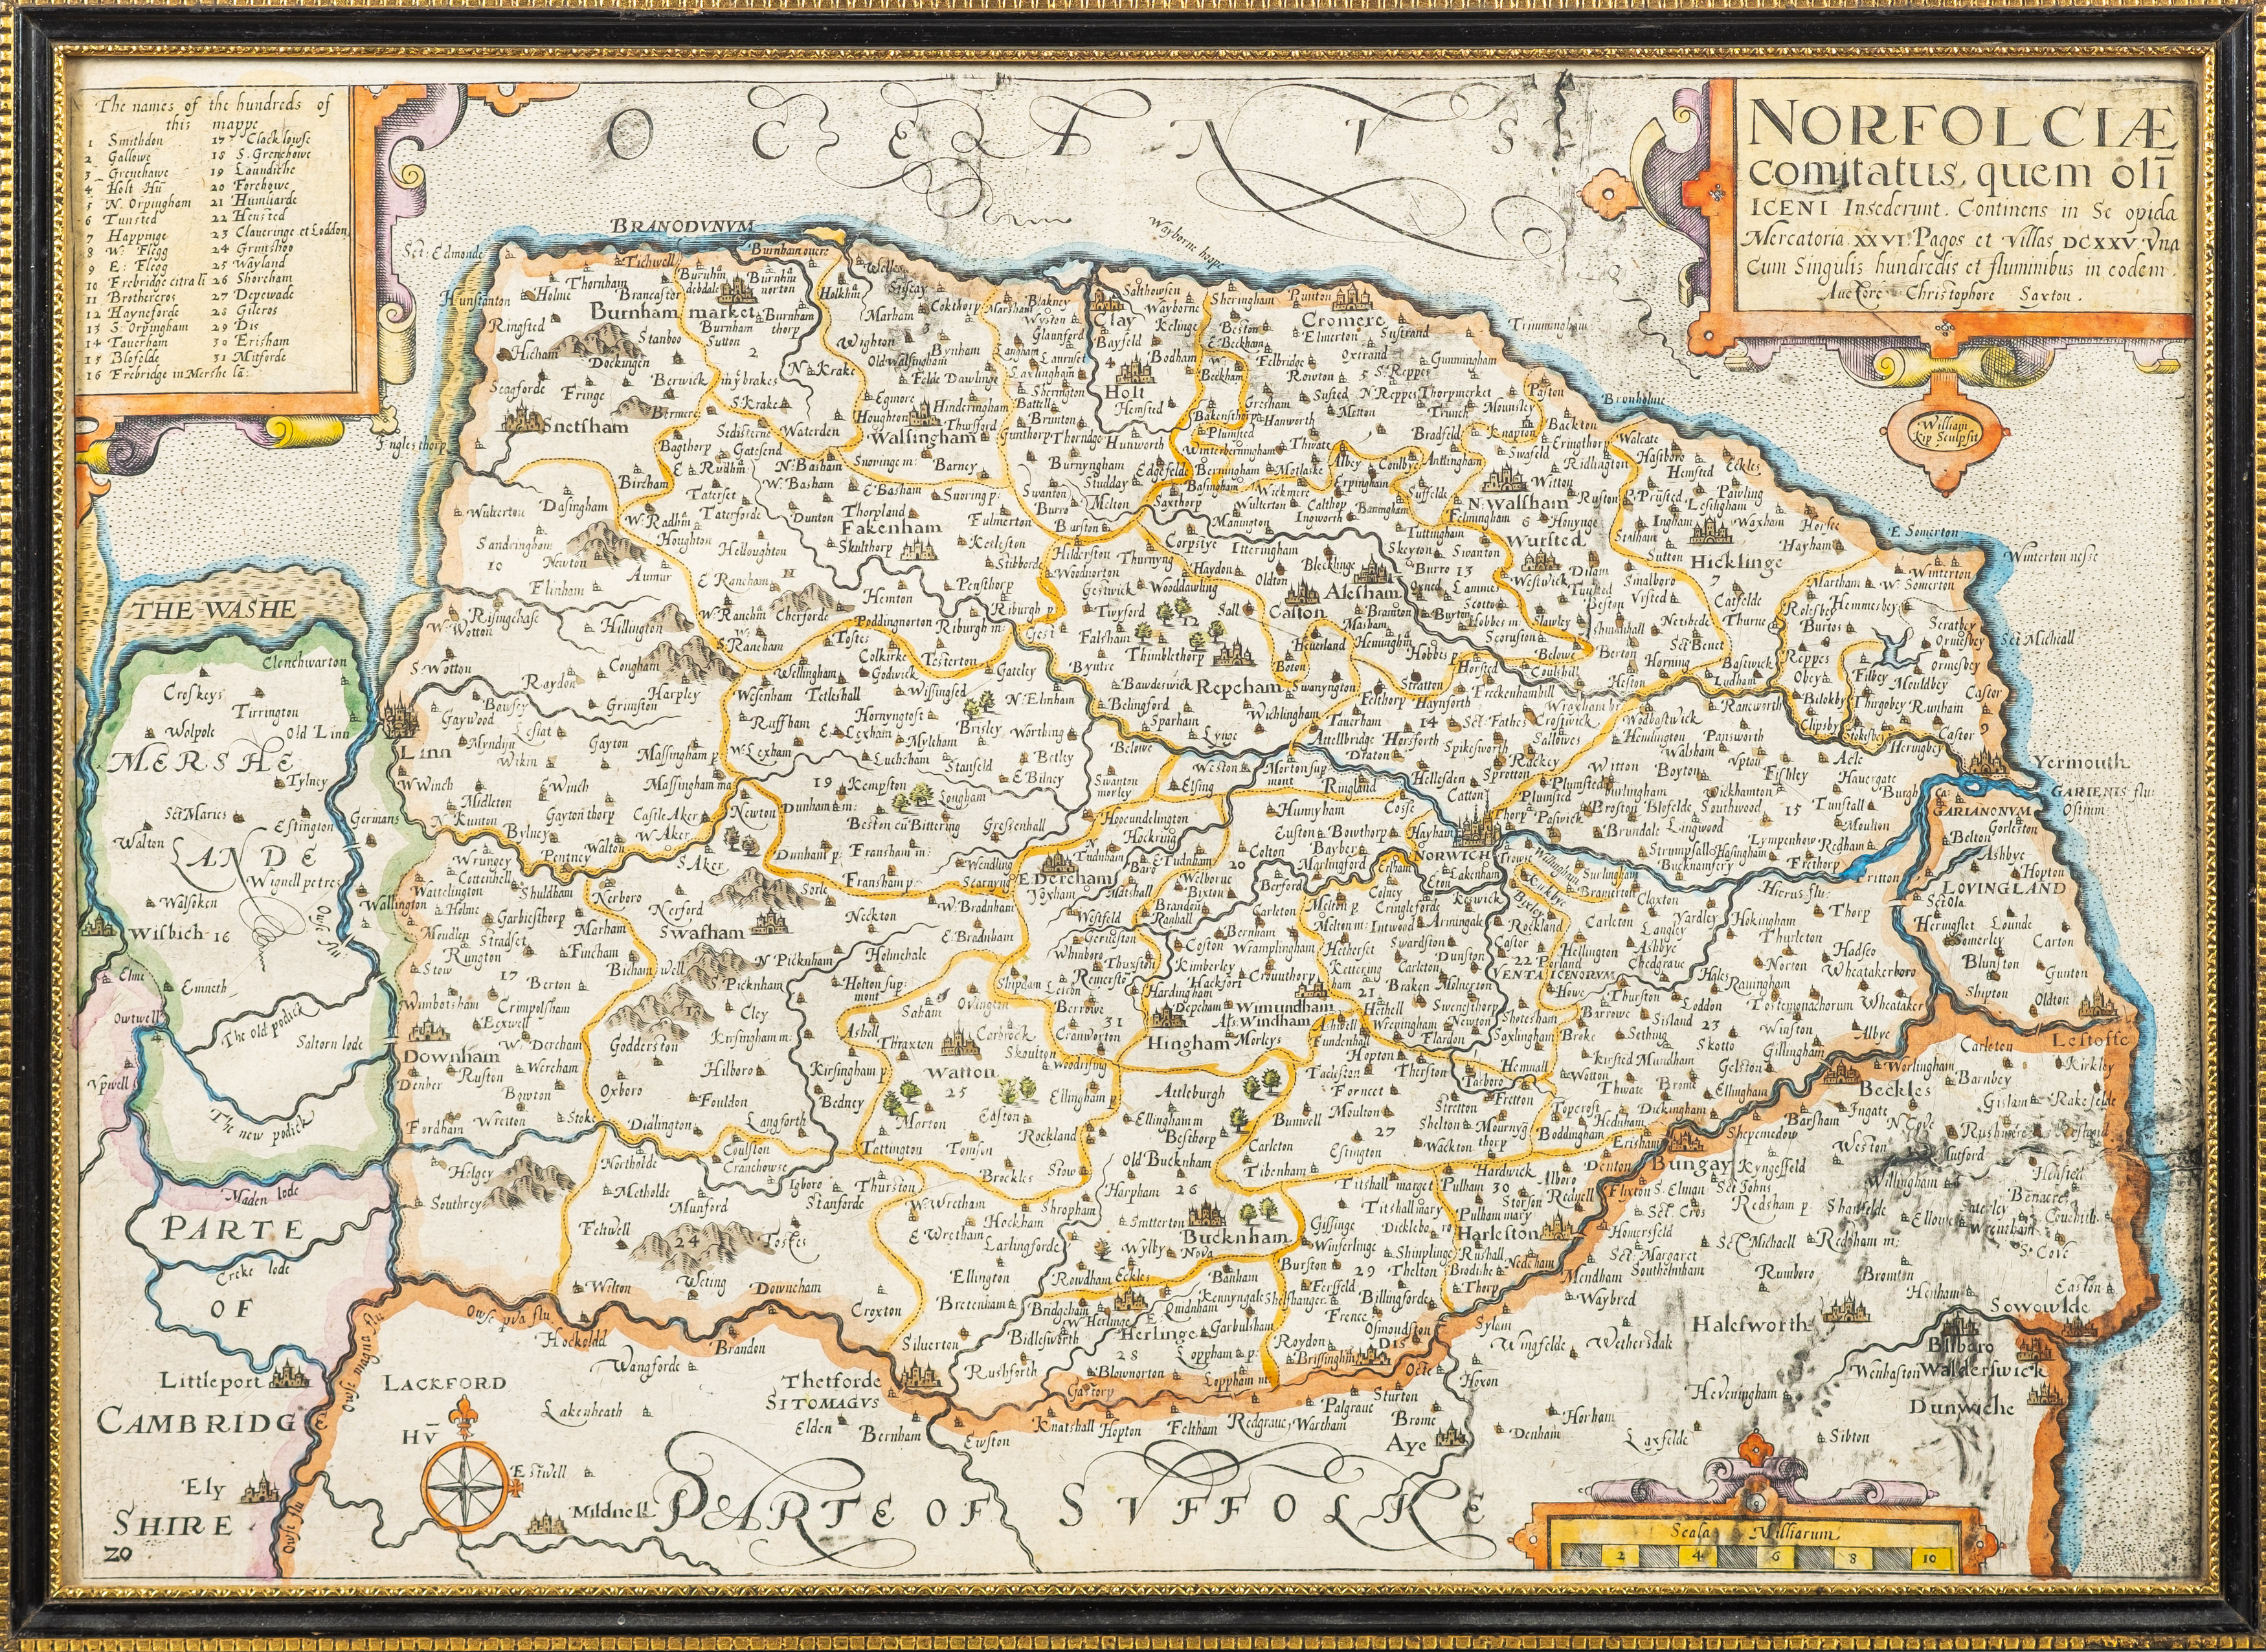 KIP, William - [ Norfolk ] Norfolciae comitatus ... hand coloured map. 380 x 280 mm, F&G.